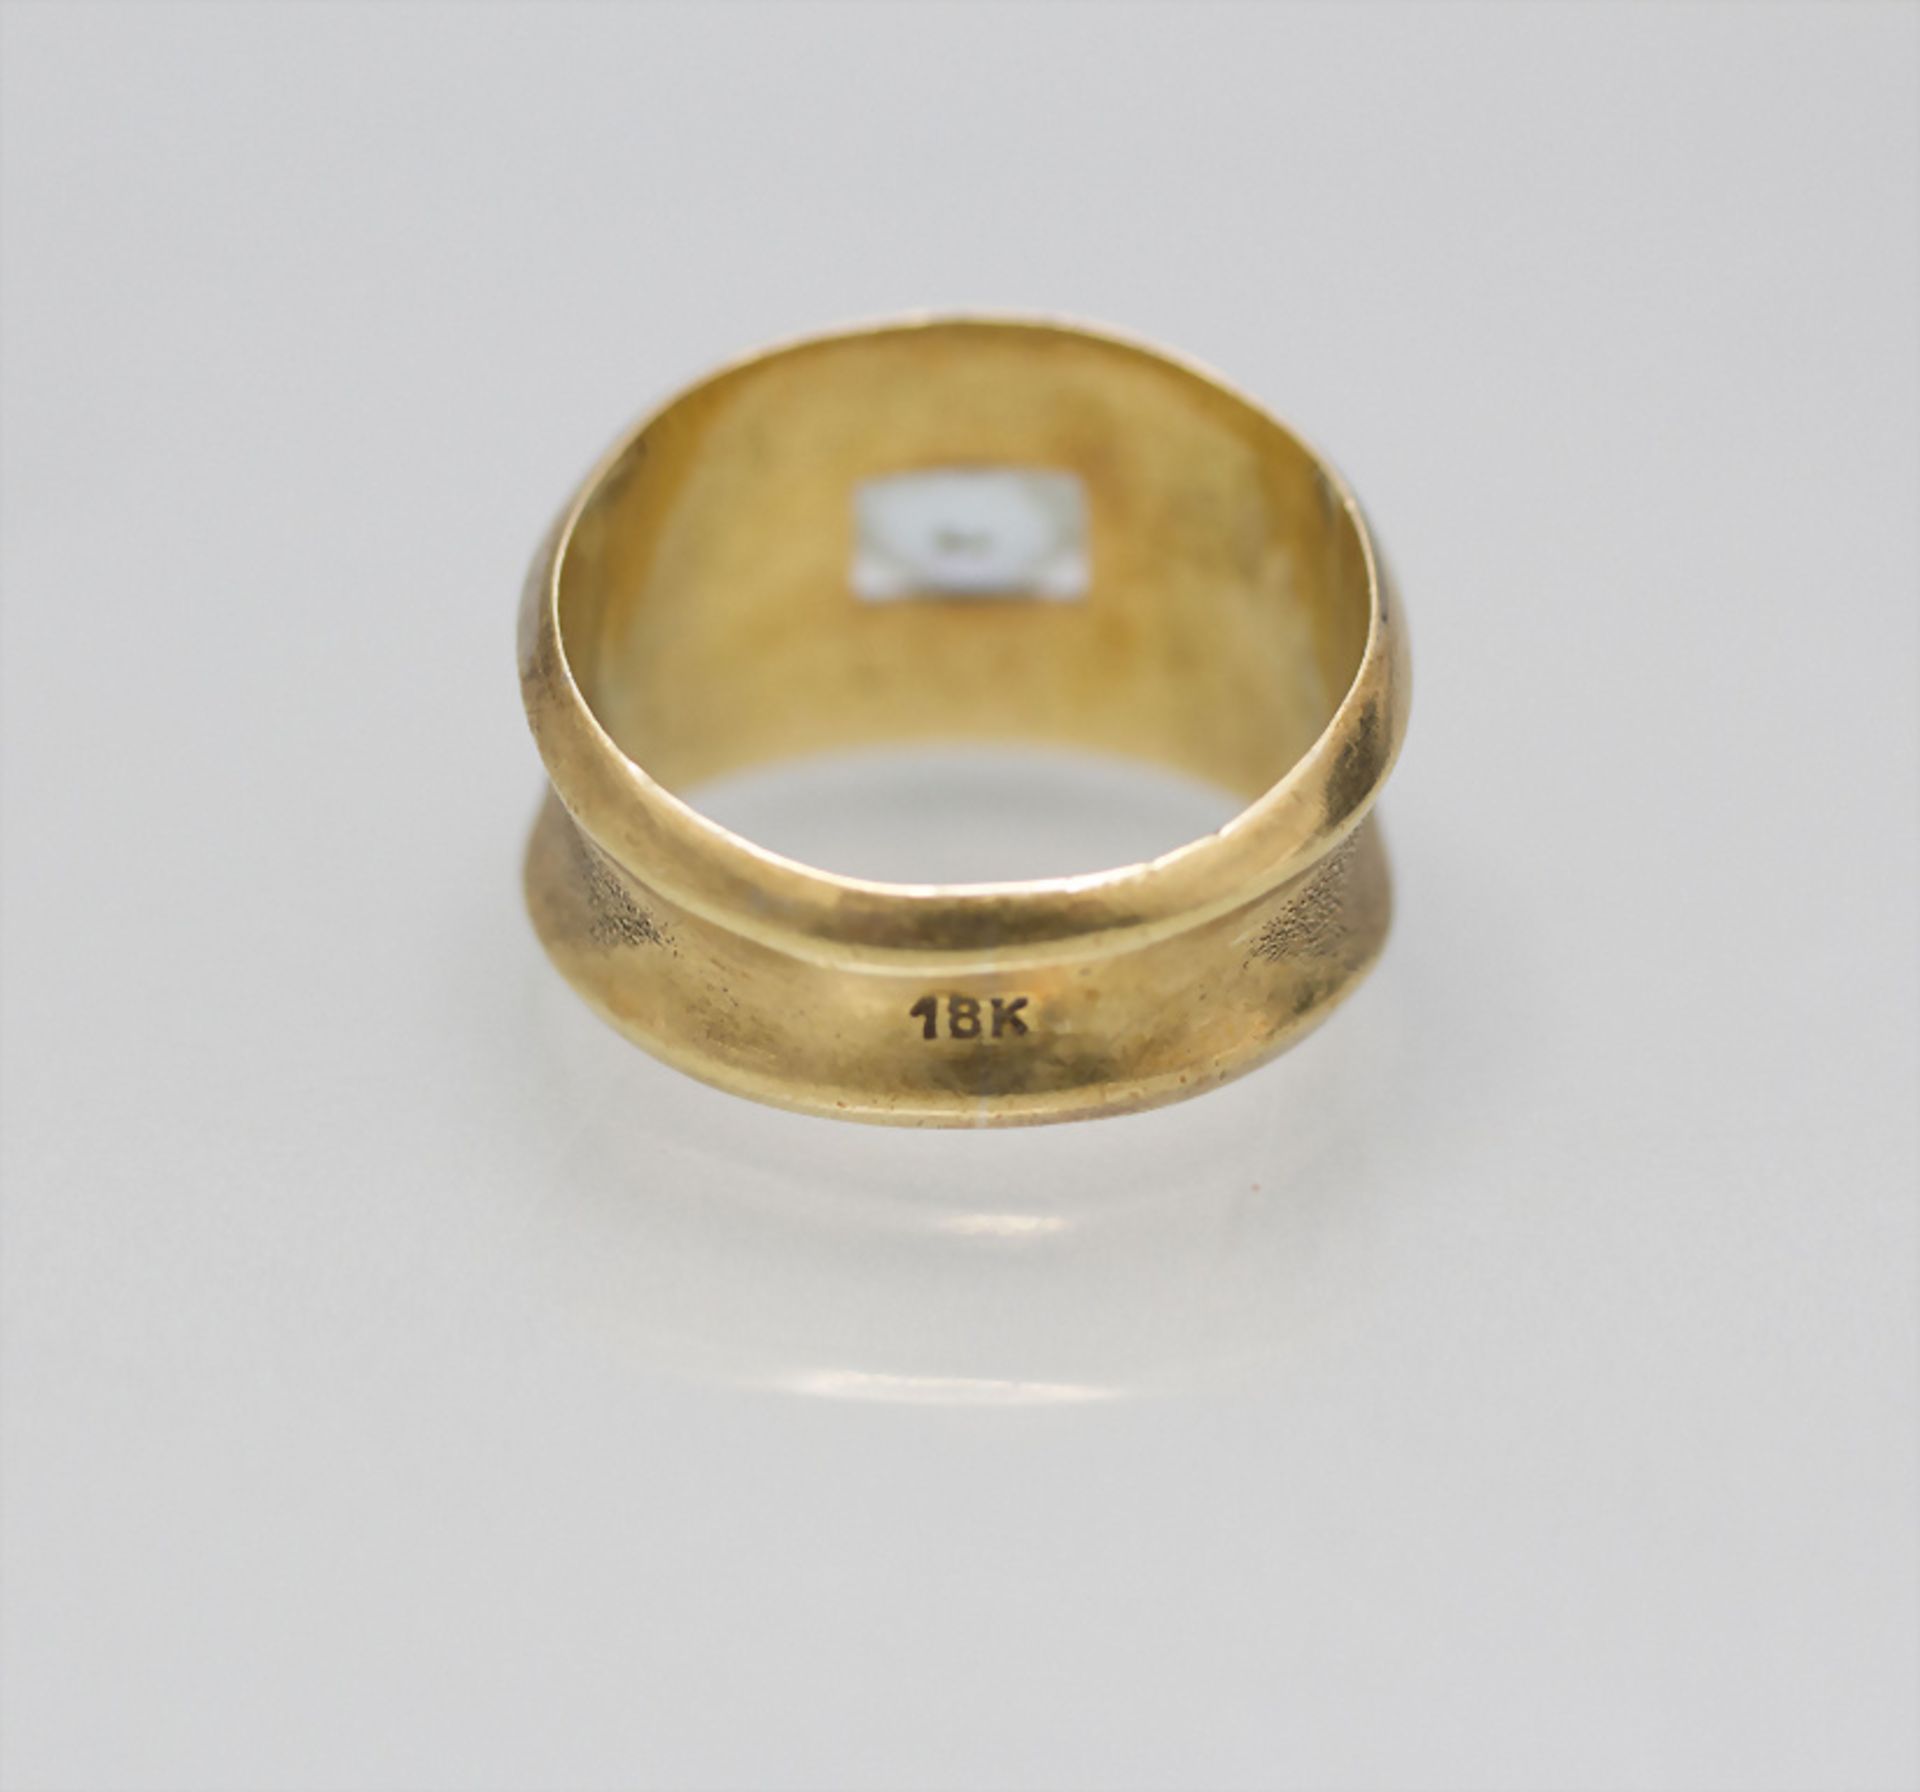 Damenring mit Aquamarin / A ladies 18 ct gold ring with an aquamarine - Image 3 of 3